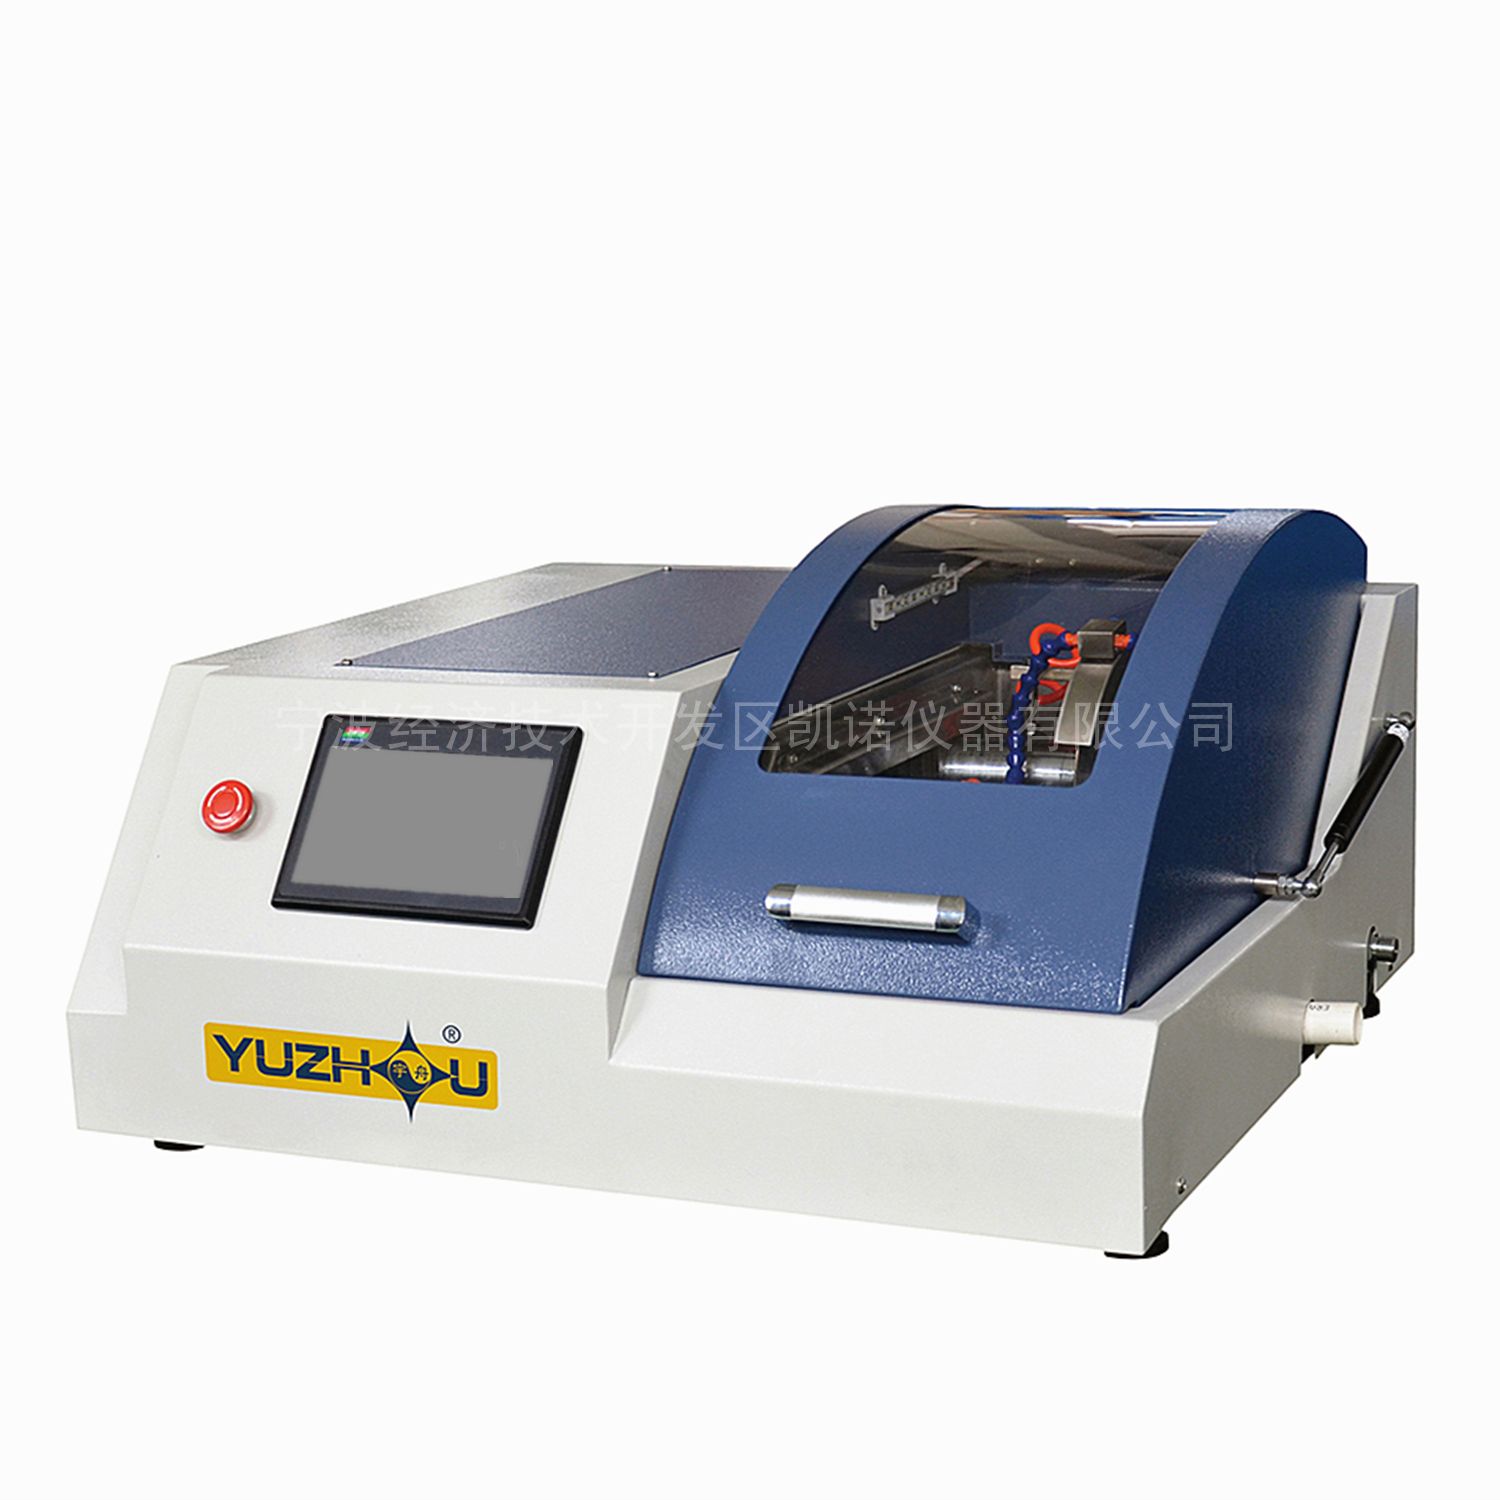 YuZhou JMQ-60ZԶи automatic precision cutting machine